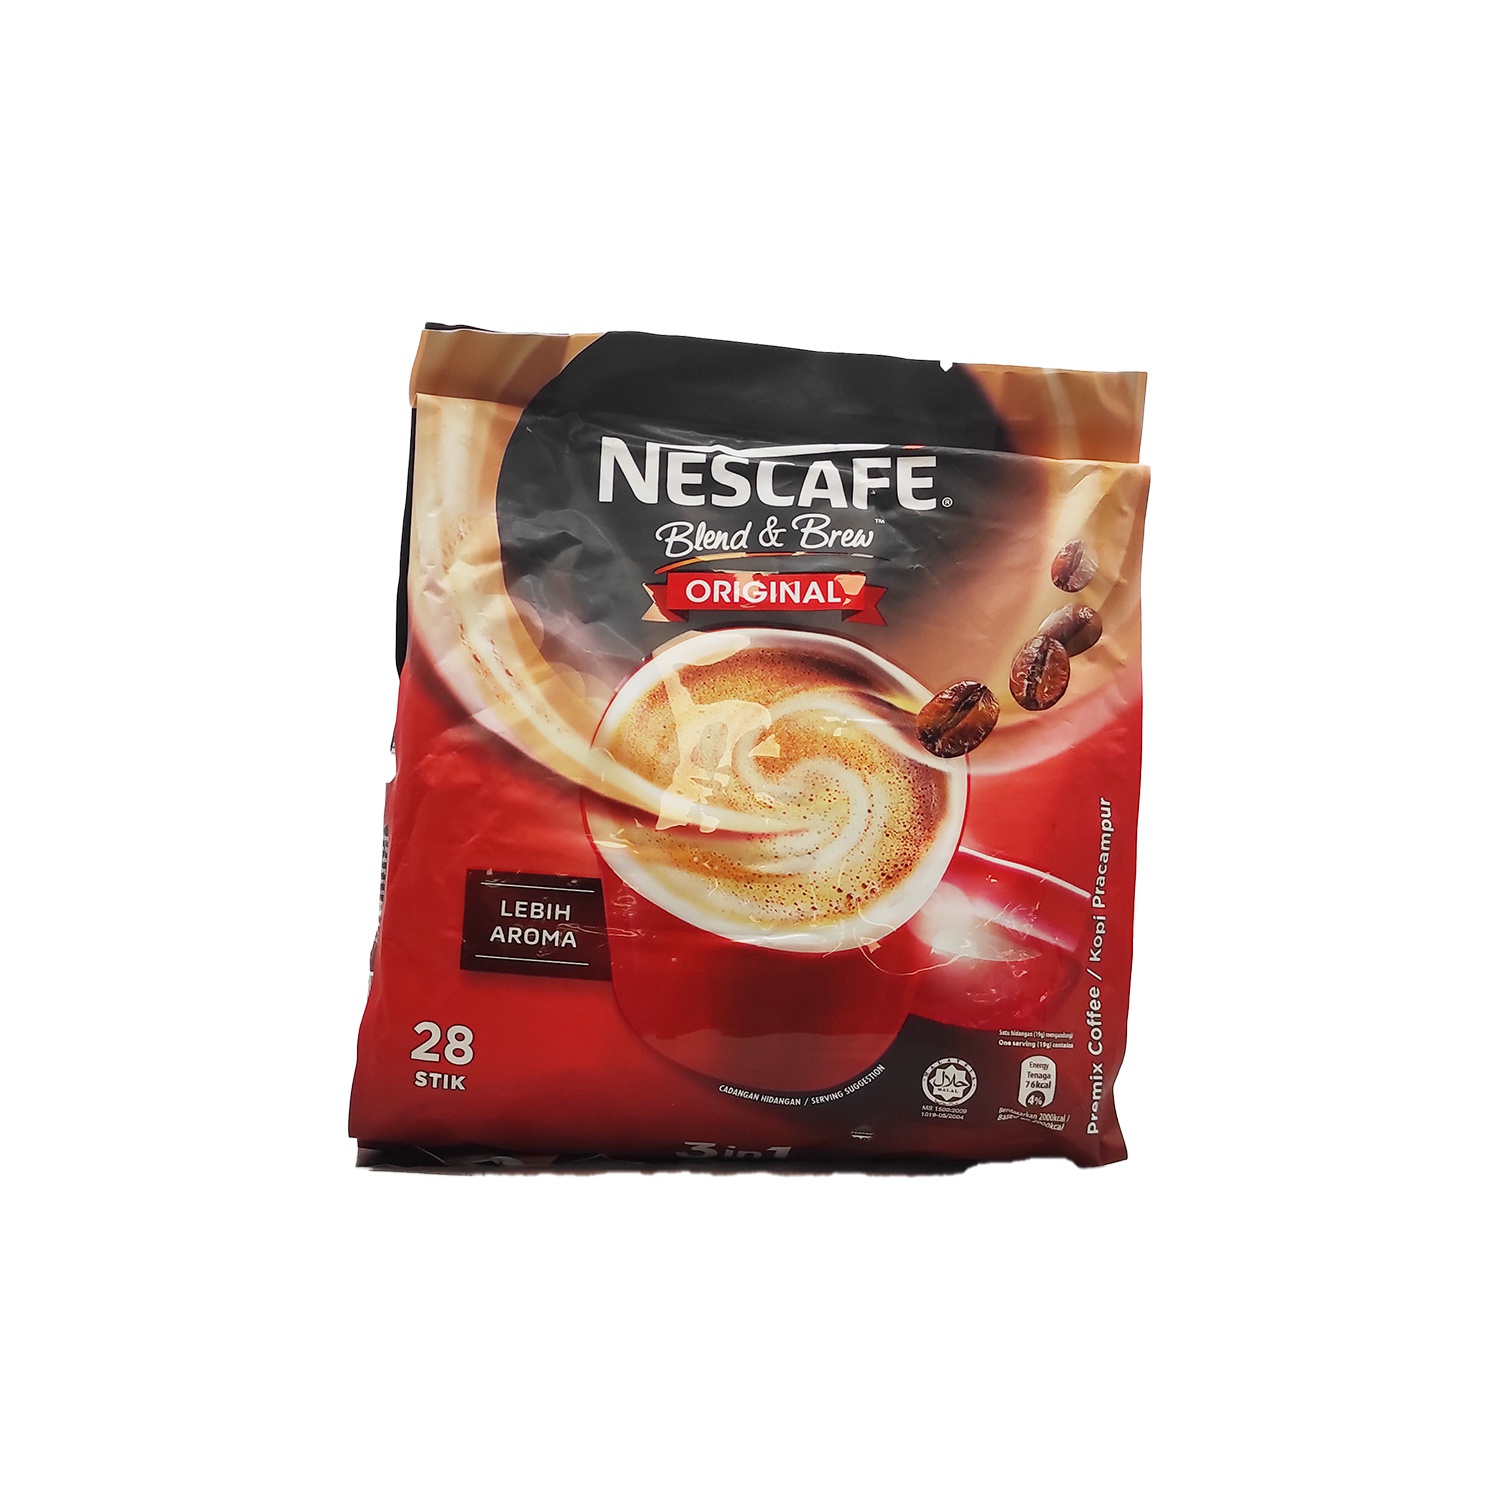 Nescafe Blend & Brew Original 28S 532G - NESCAFE - Coffee - in Sri Lanka